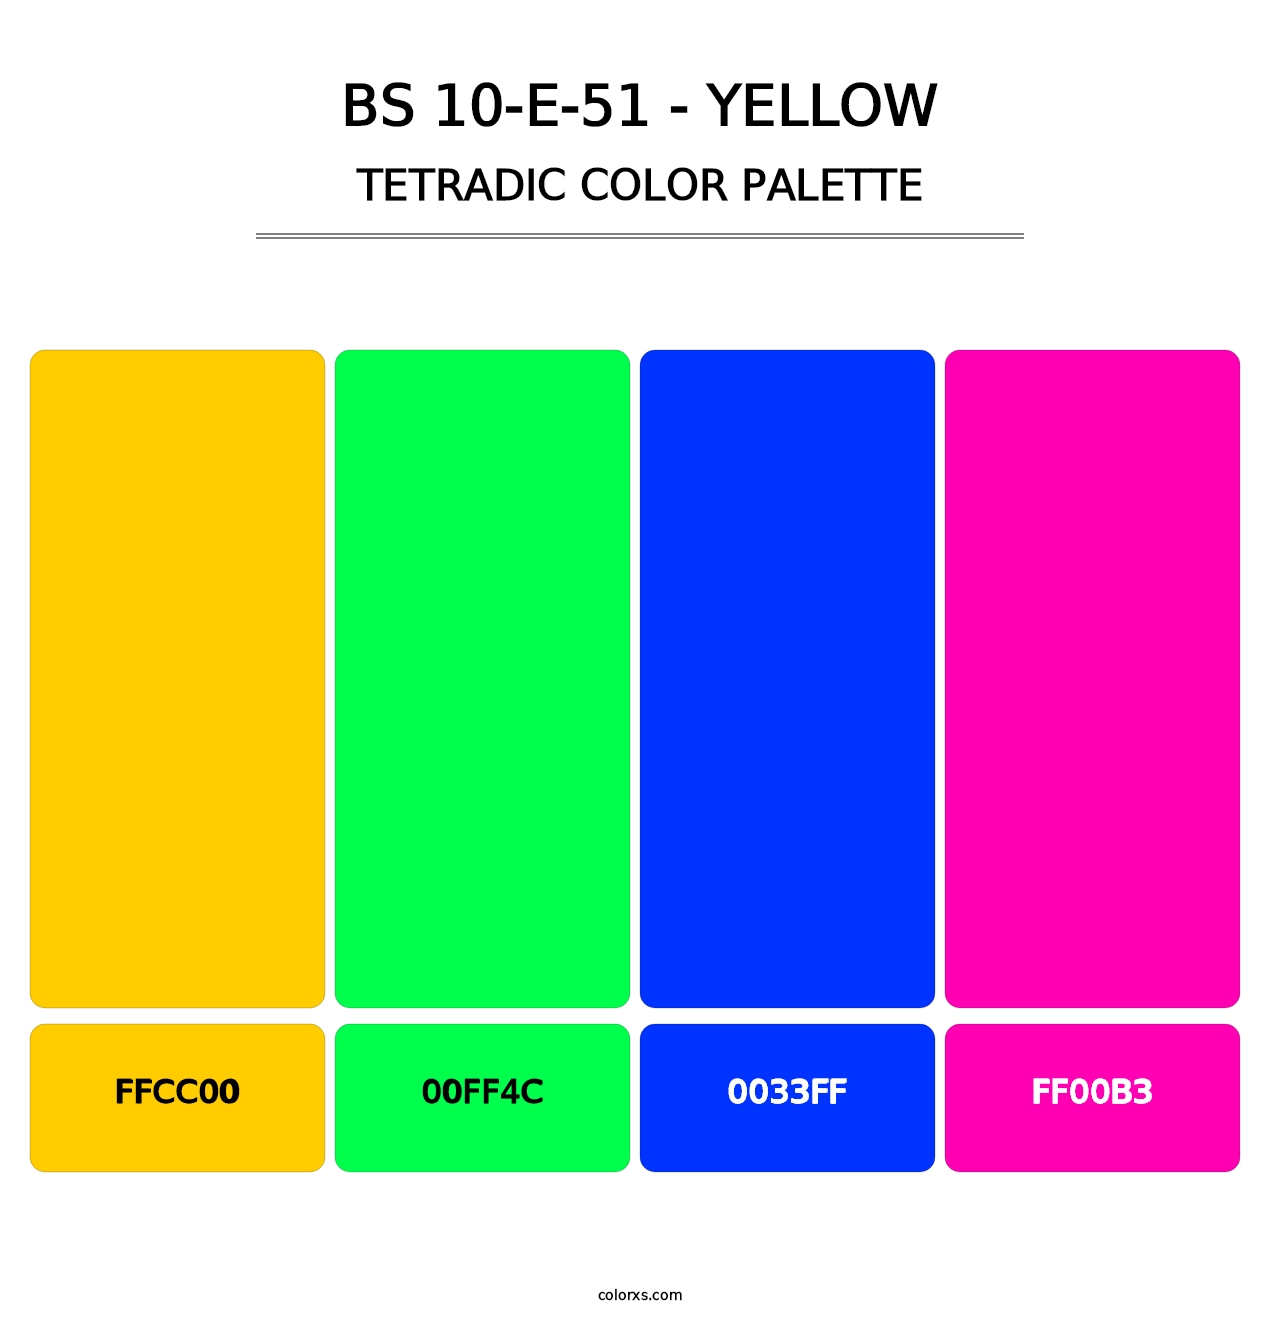 BS 10-E-51 - Yellow - Tetradic Color Palette